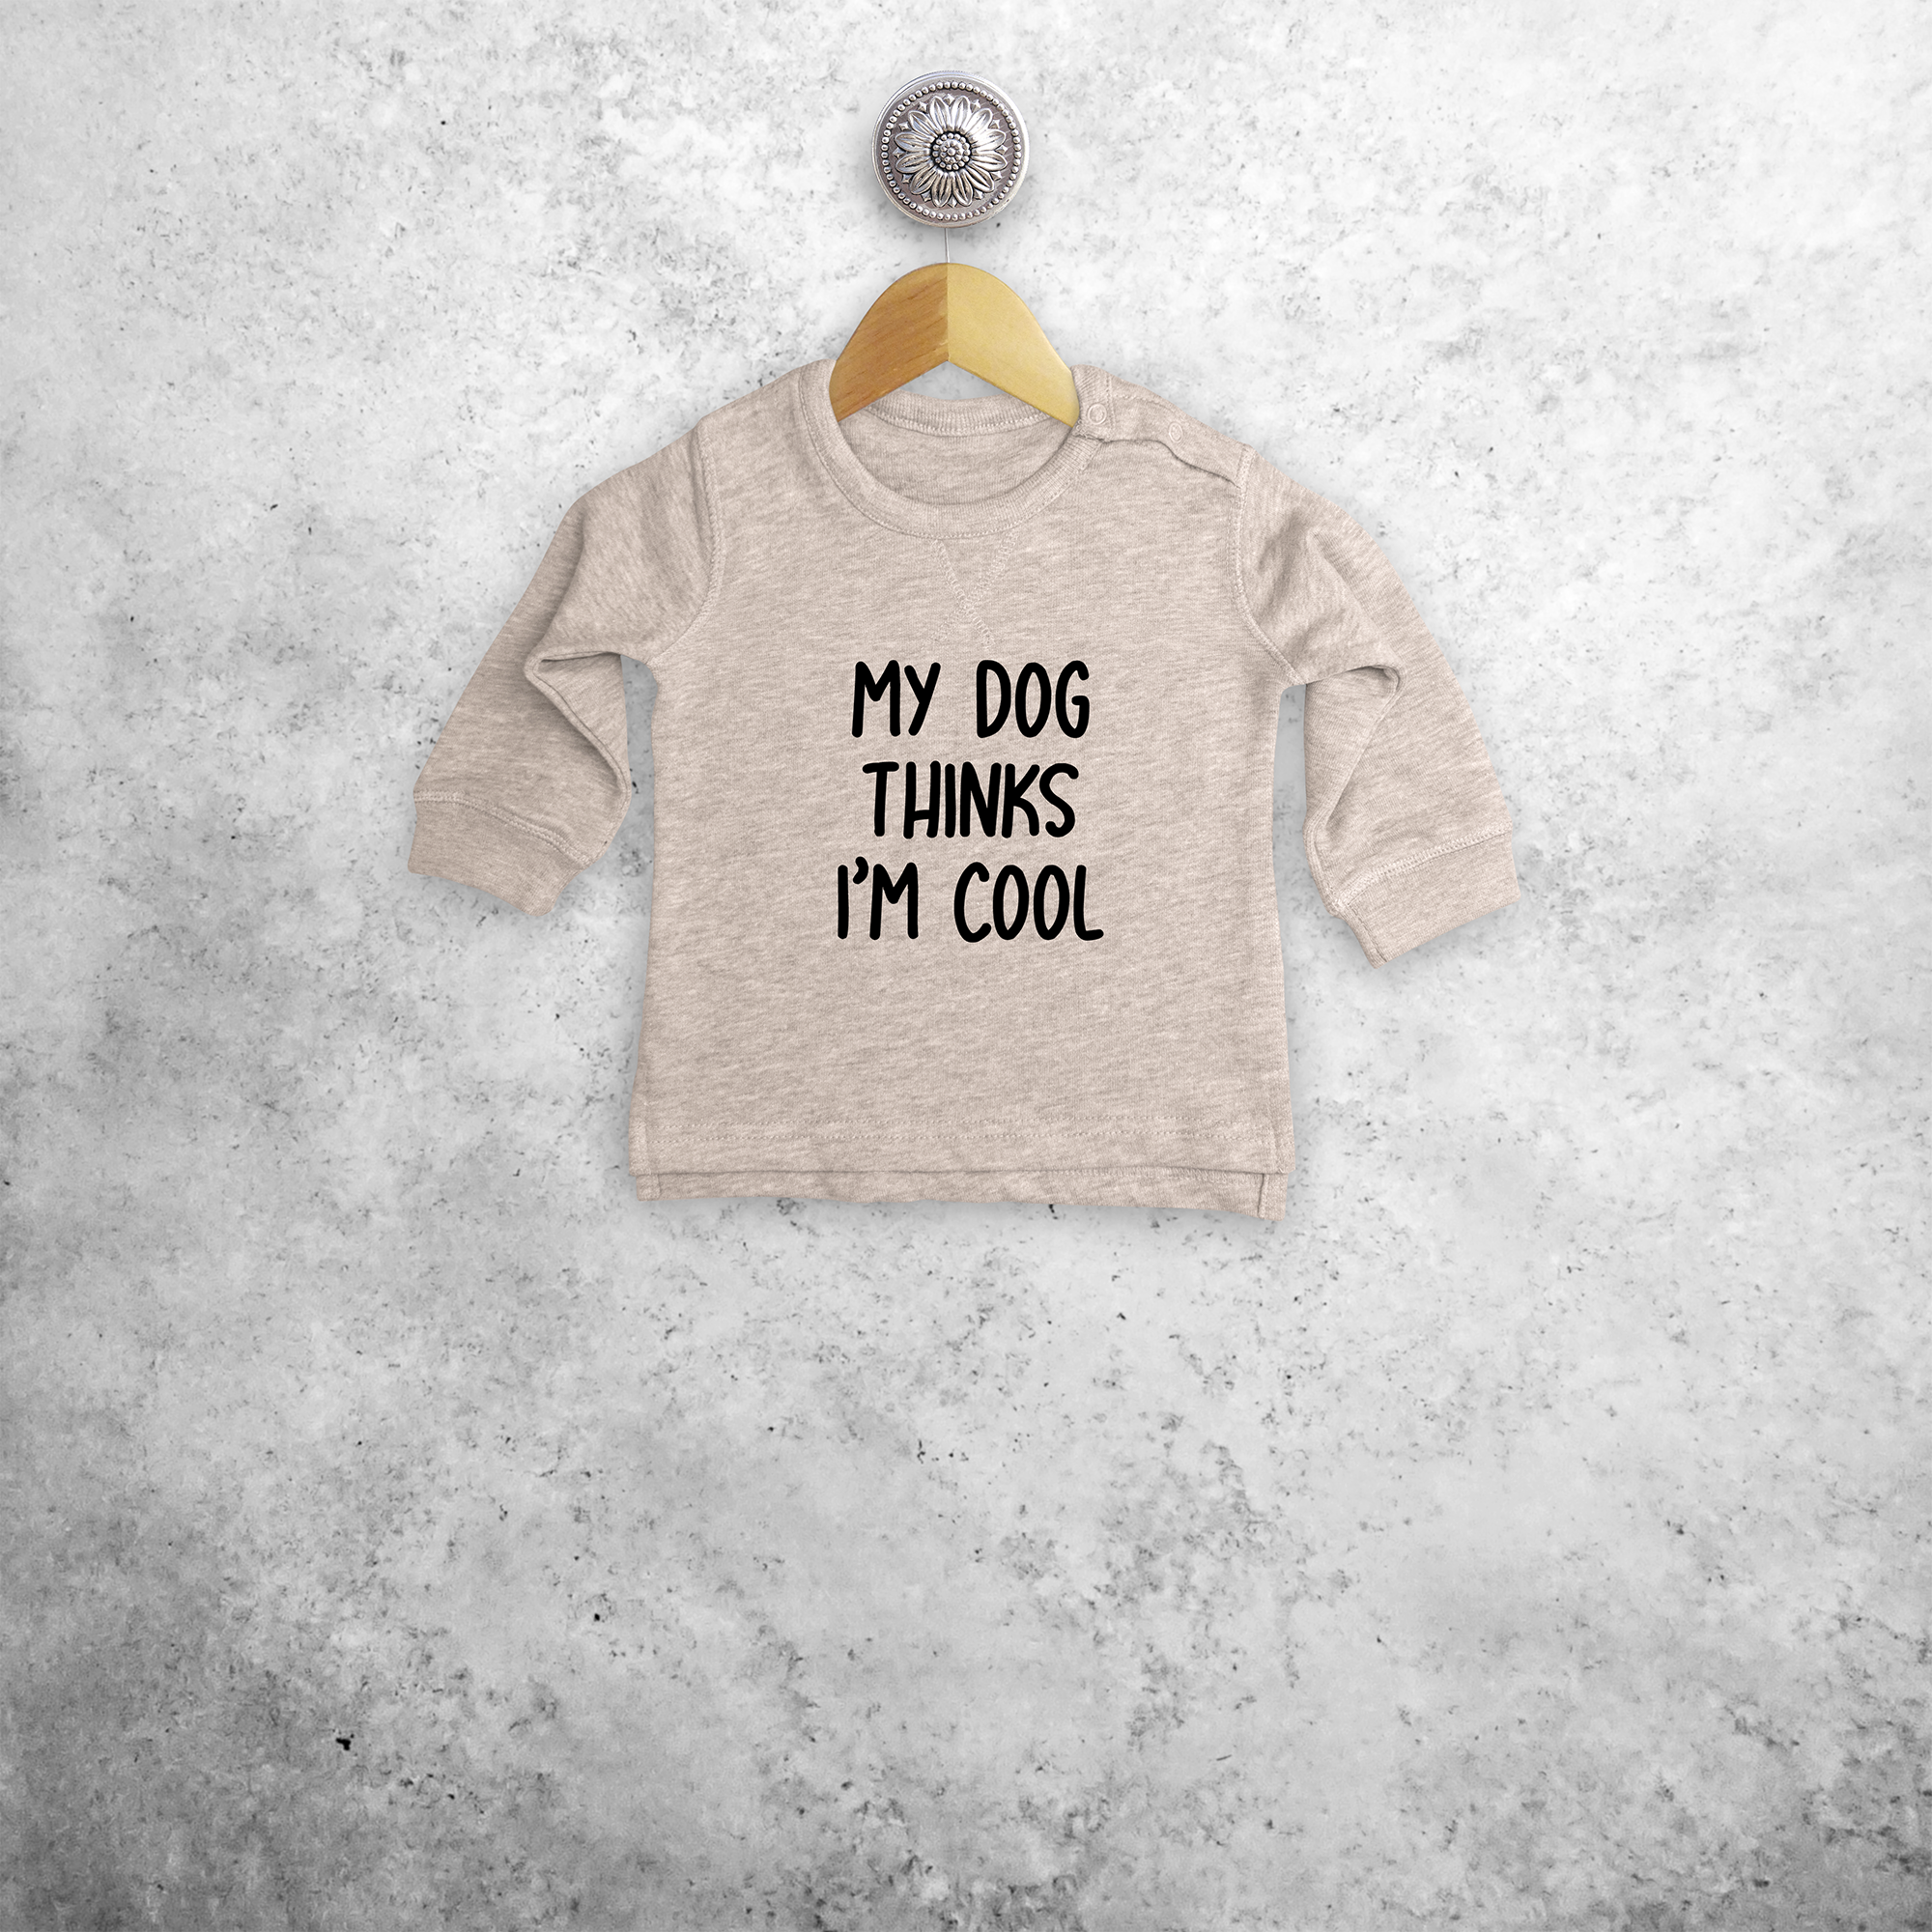 'My dog thinks I'm cool' baby sweater